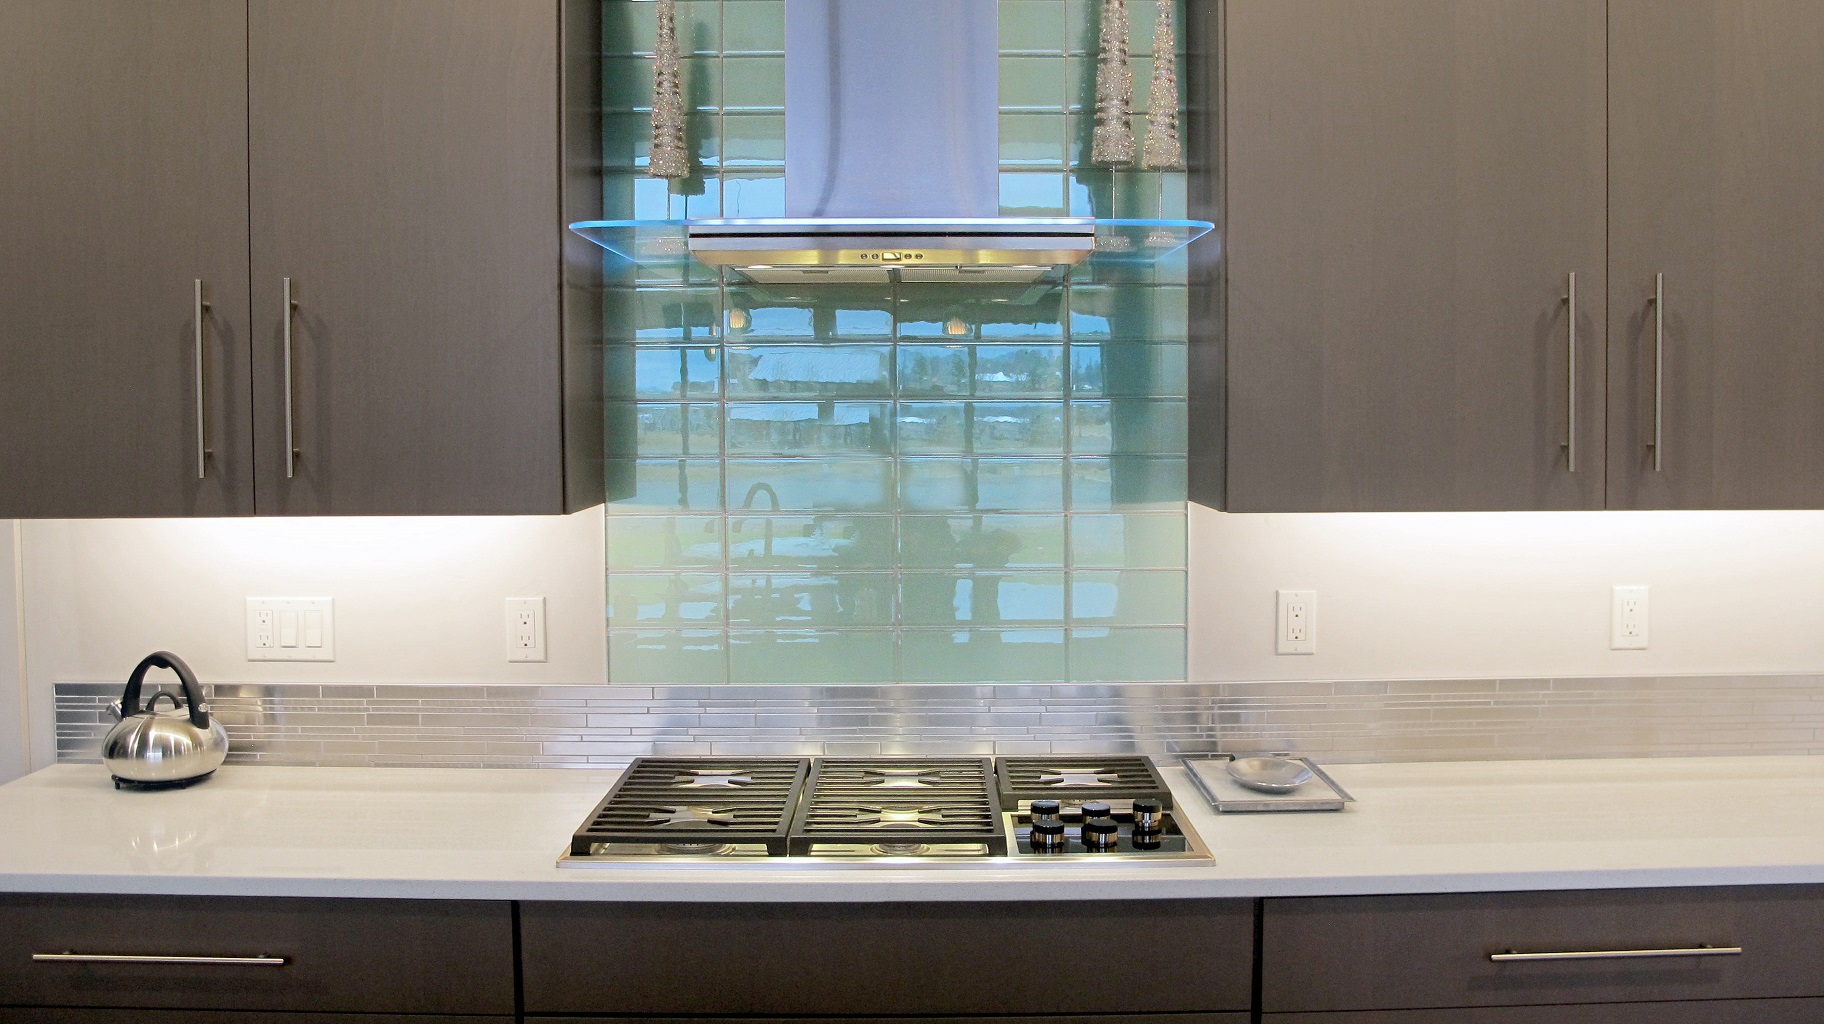 Crystile Clear, Clear Glass Subway Tile Kitchen Backsplash